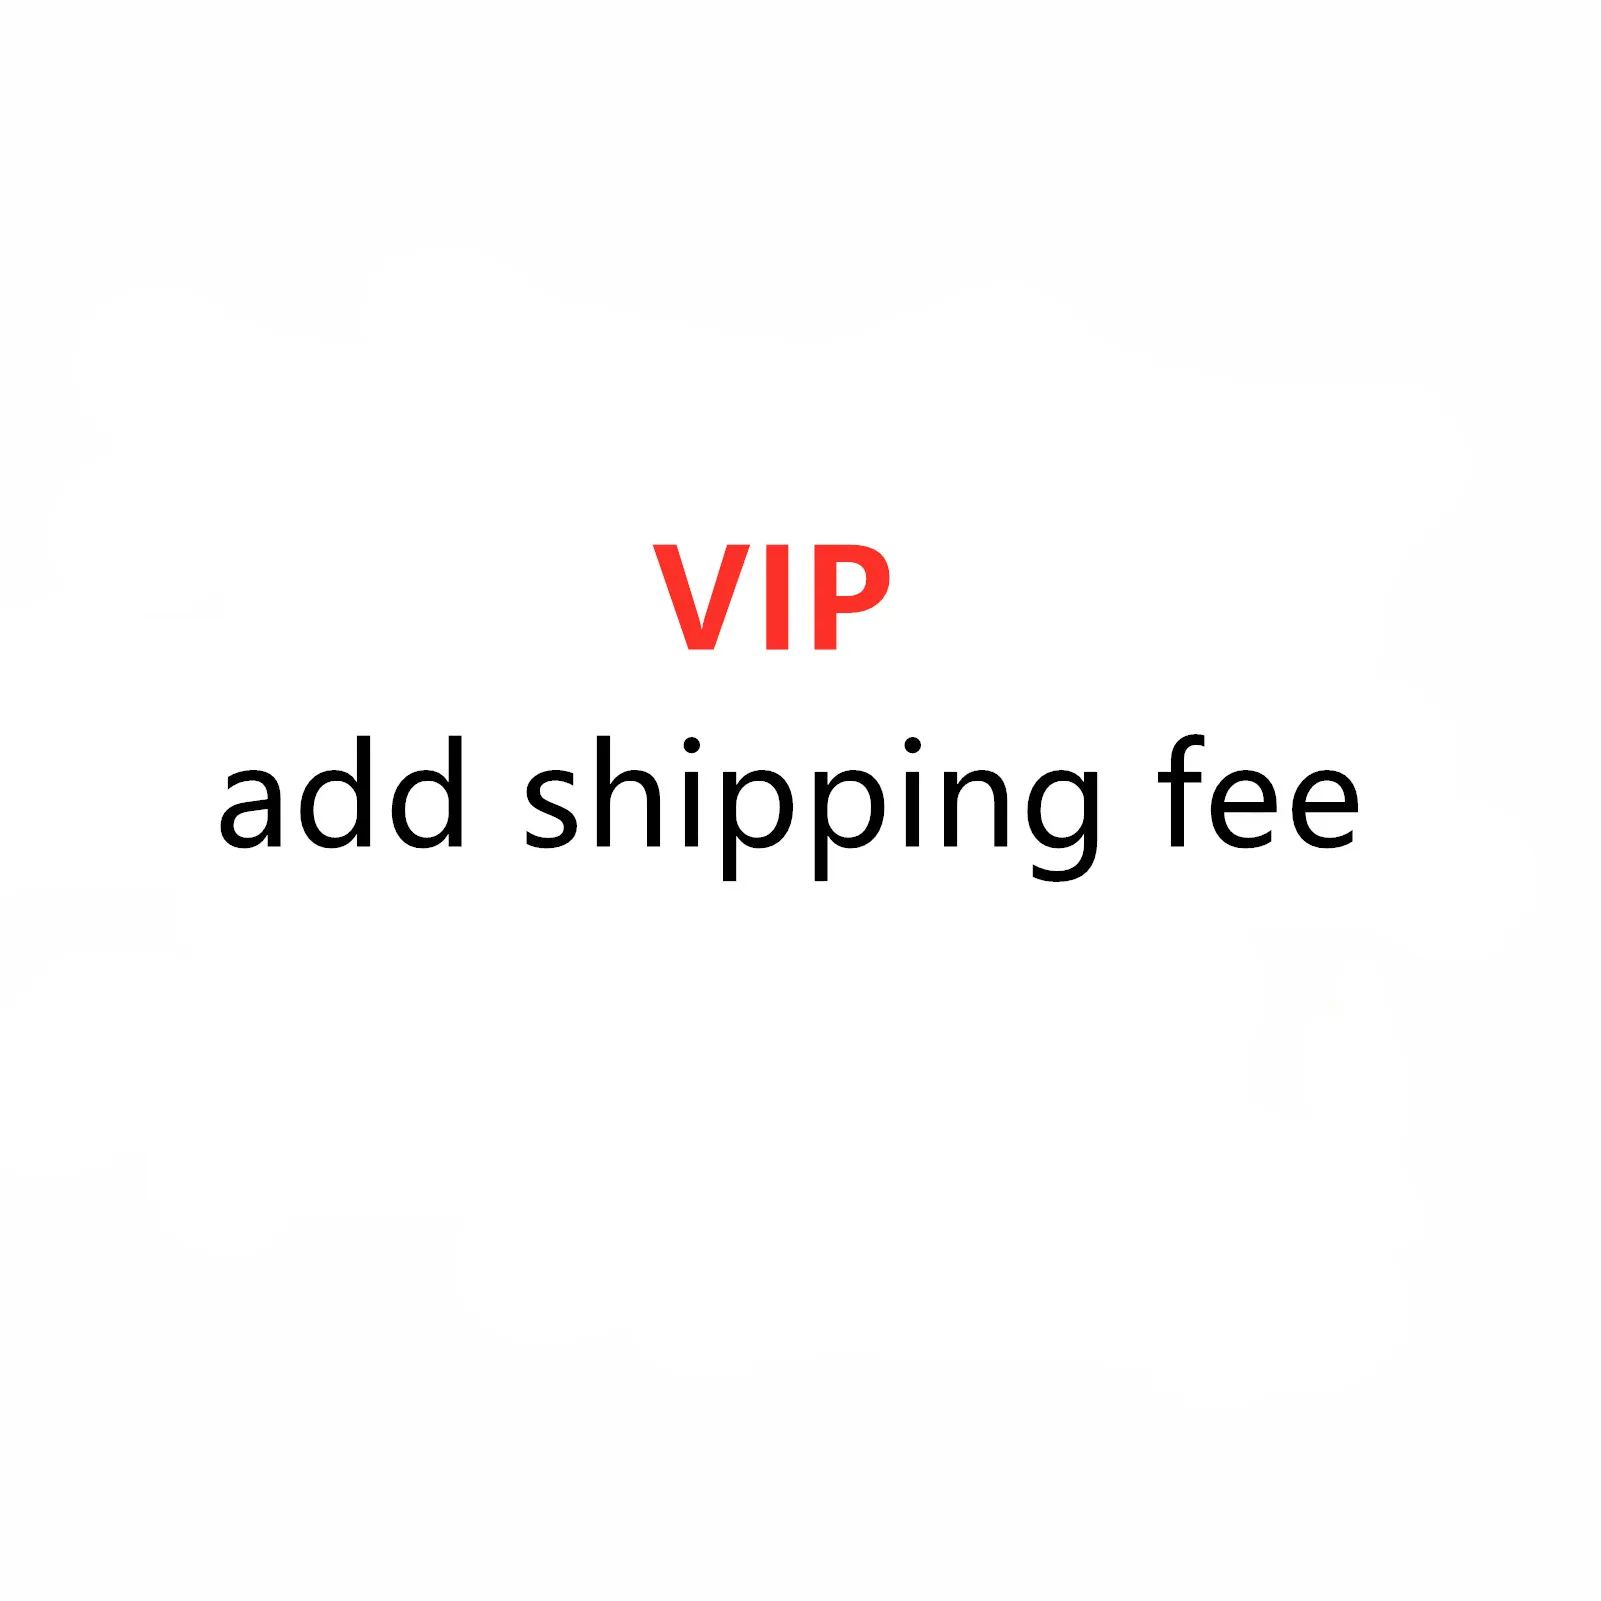 VIP add shipping fee vip link shipping fee